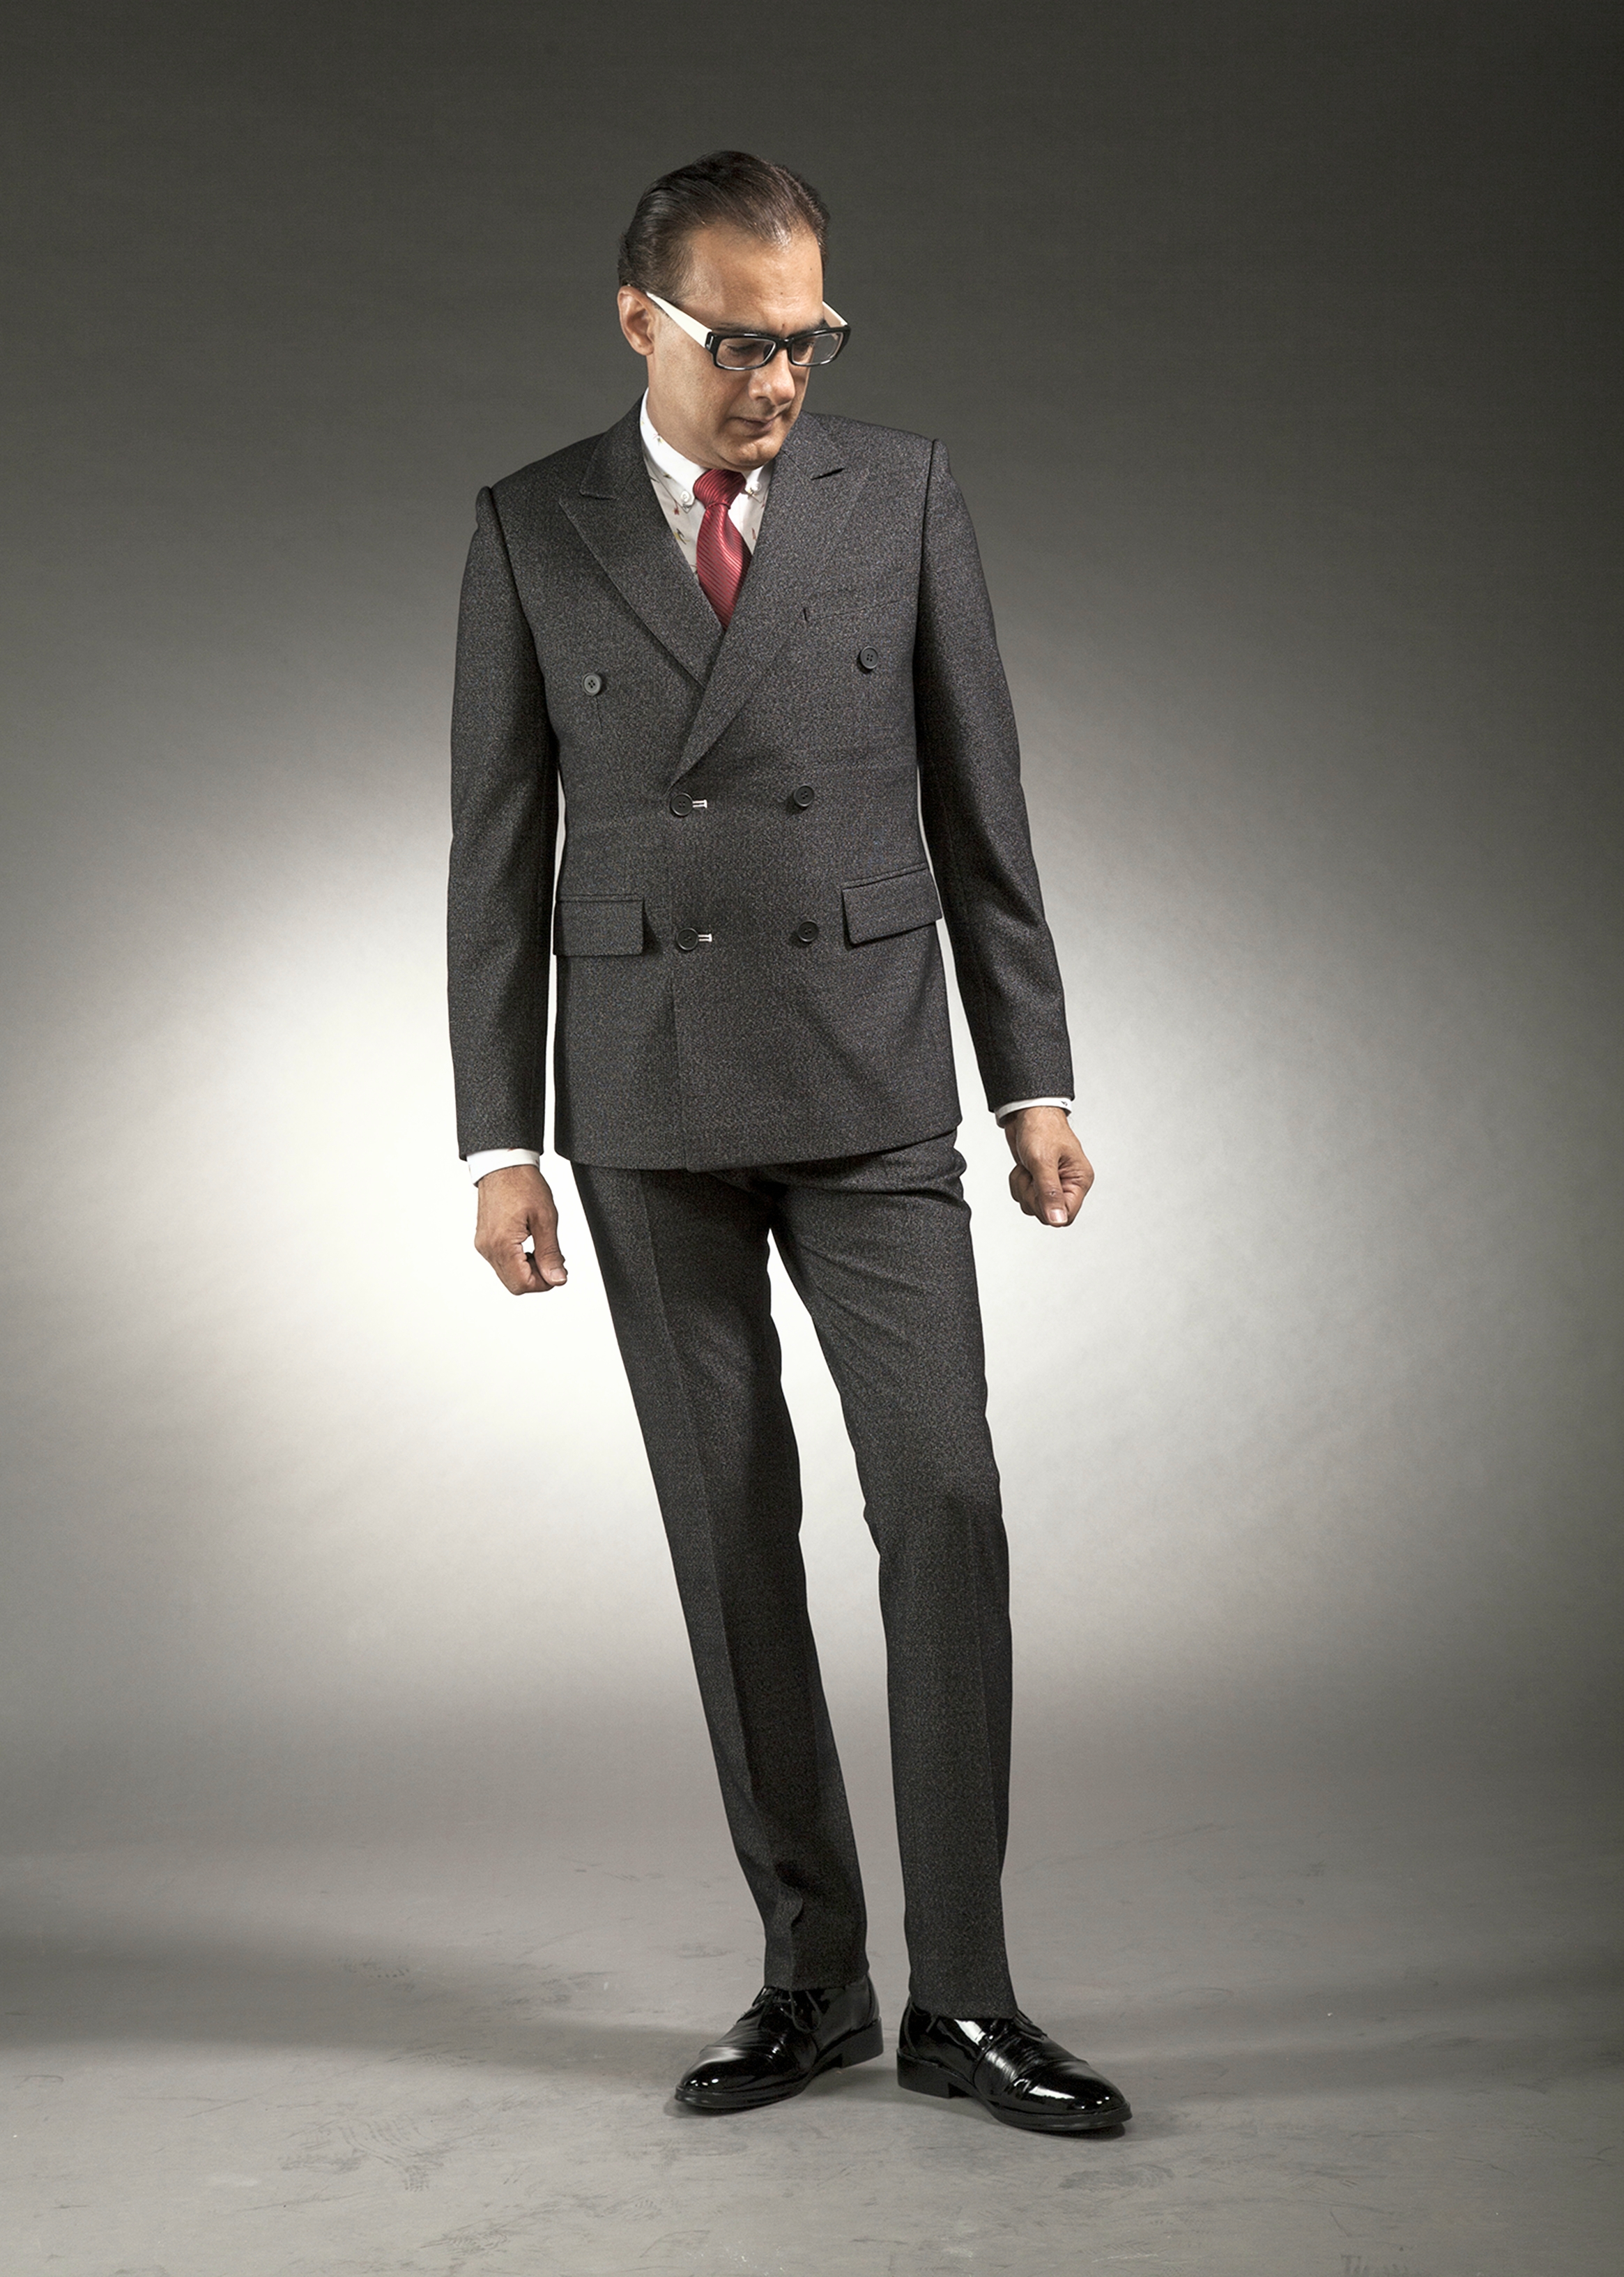 Suit Rental Suits Rent Hire Designer My Singapore Tailor Tailors Rentals Shop Tuxedo Black Tie Wedding Formal 27